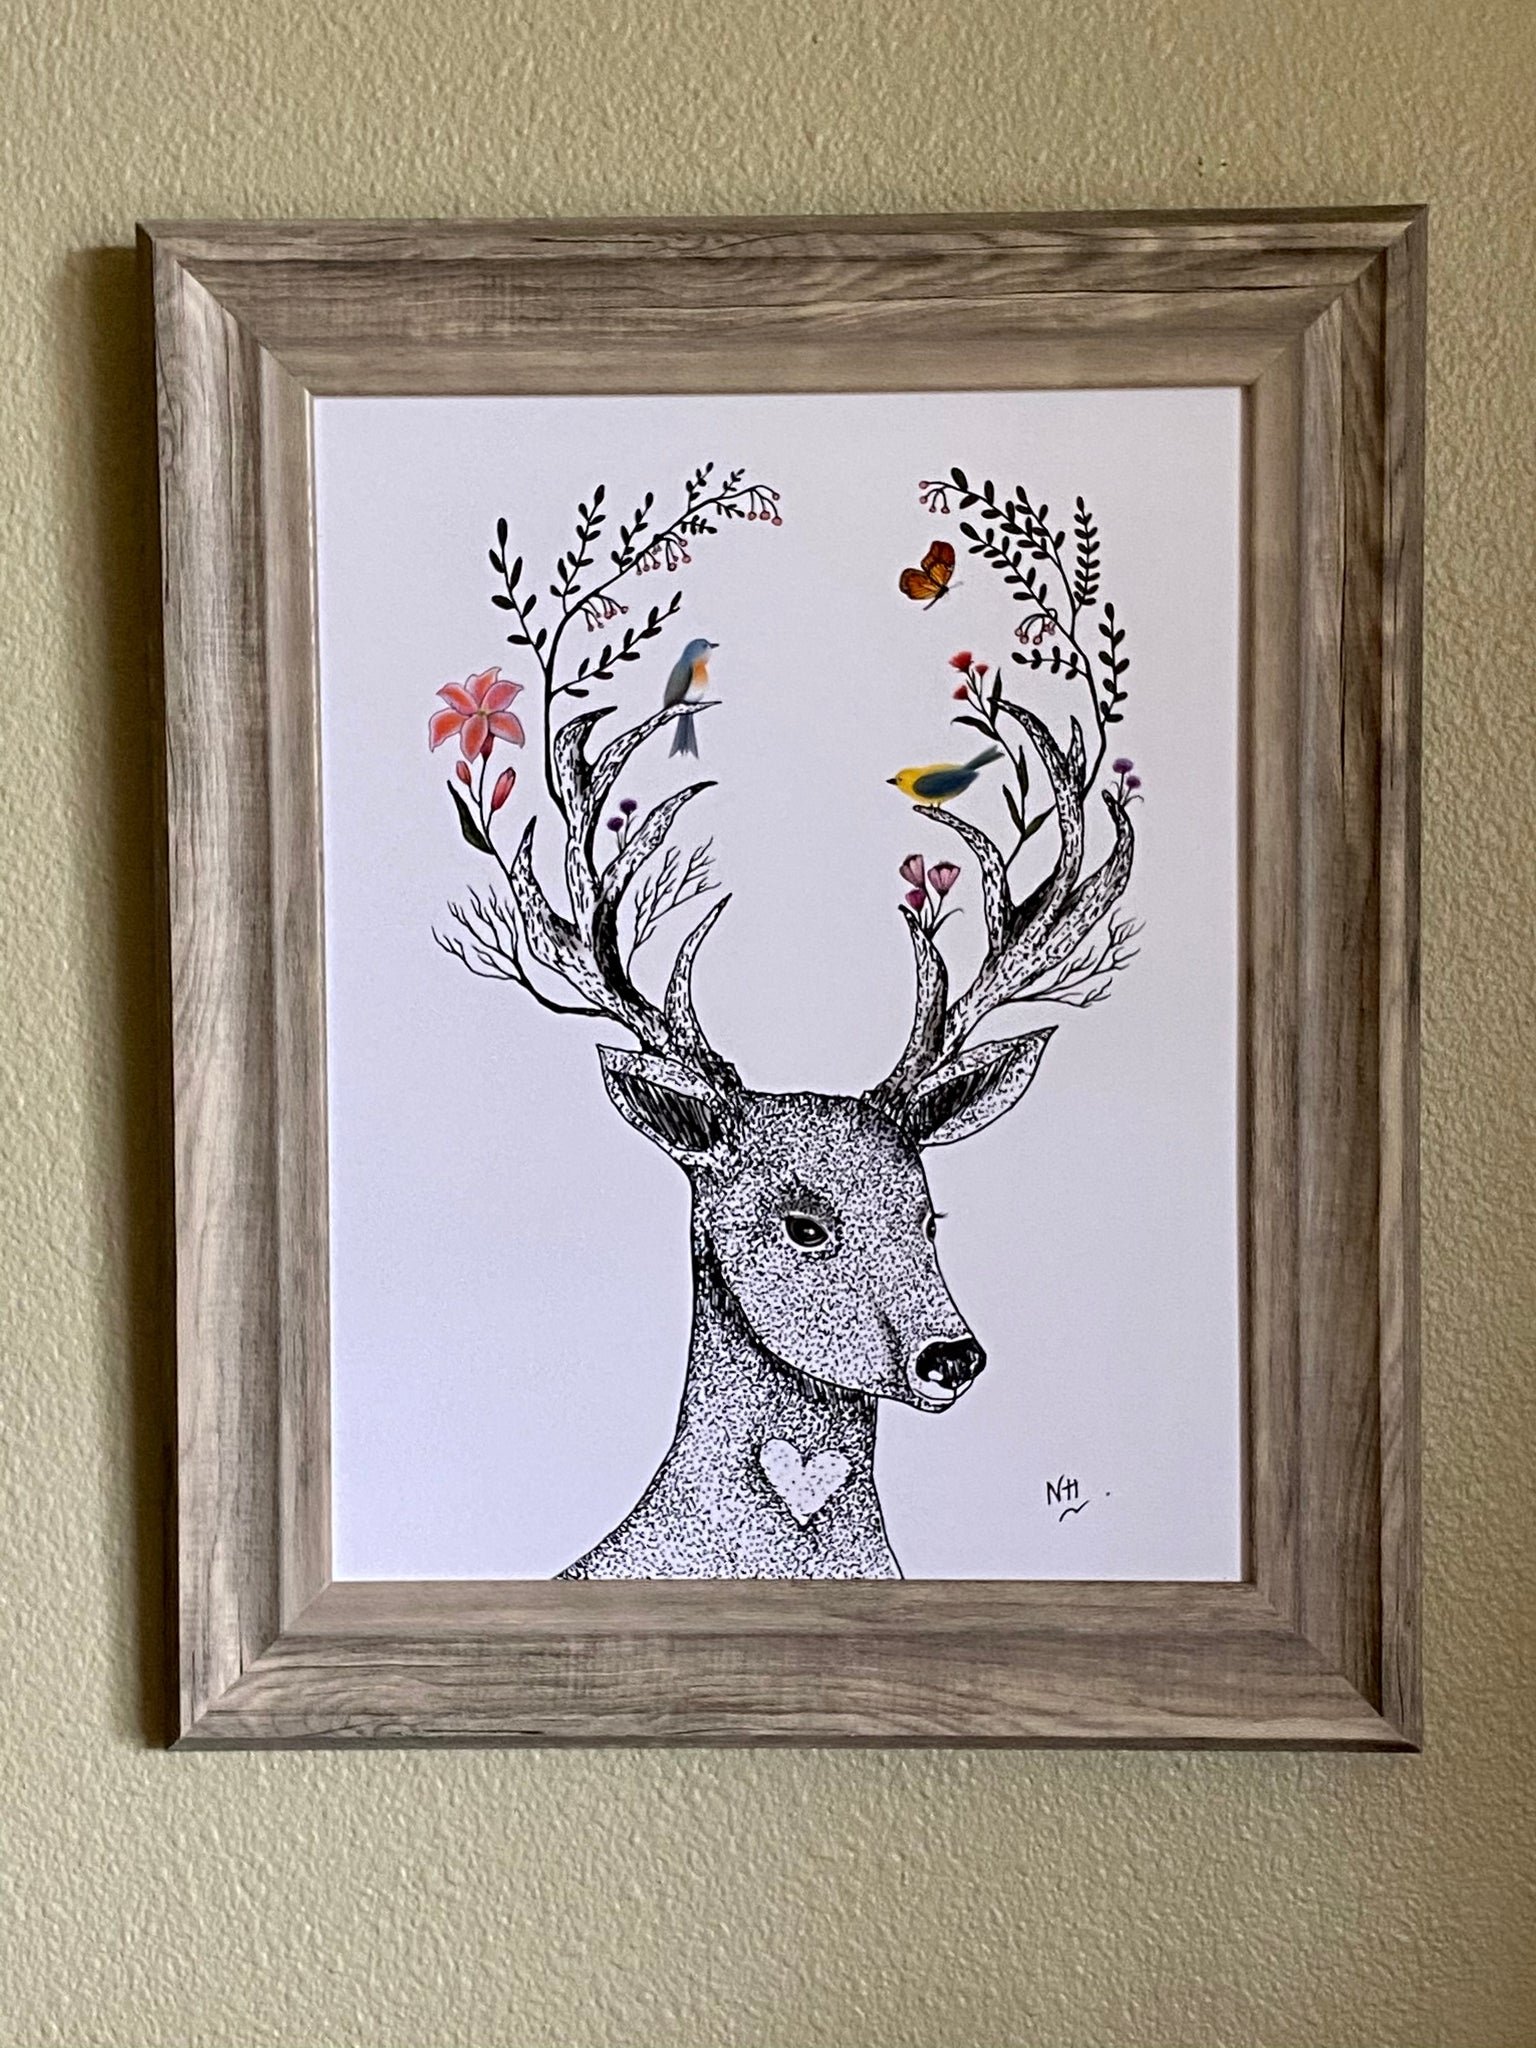 The Marvelous Deer: Art Print by Nina Hand